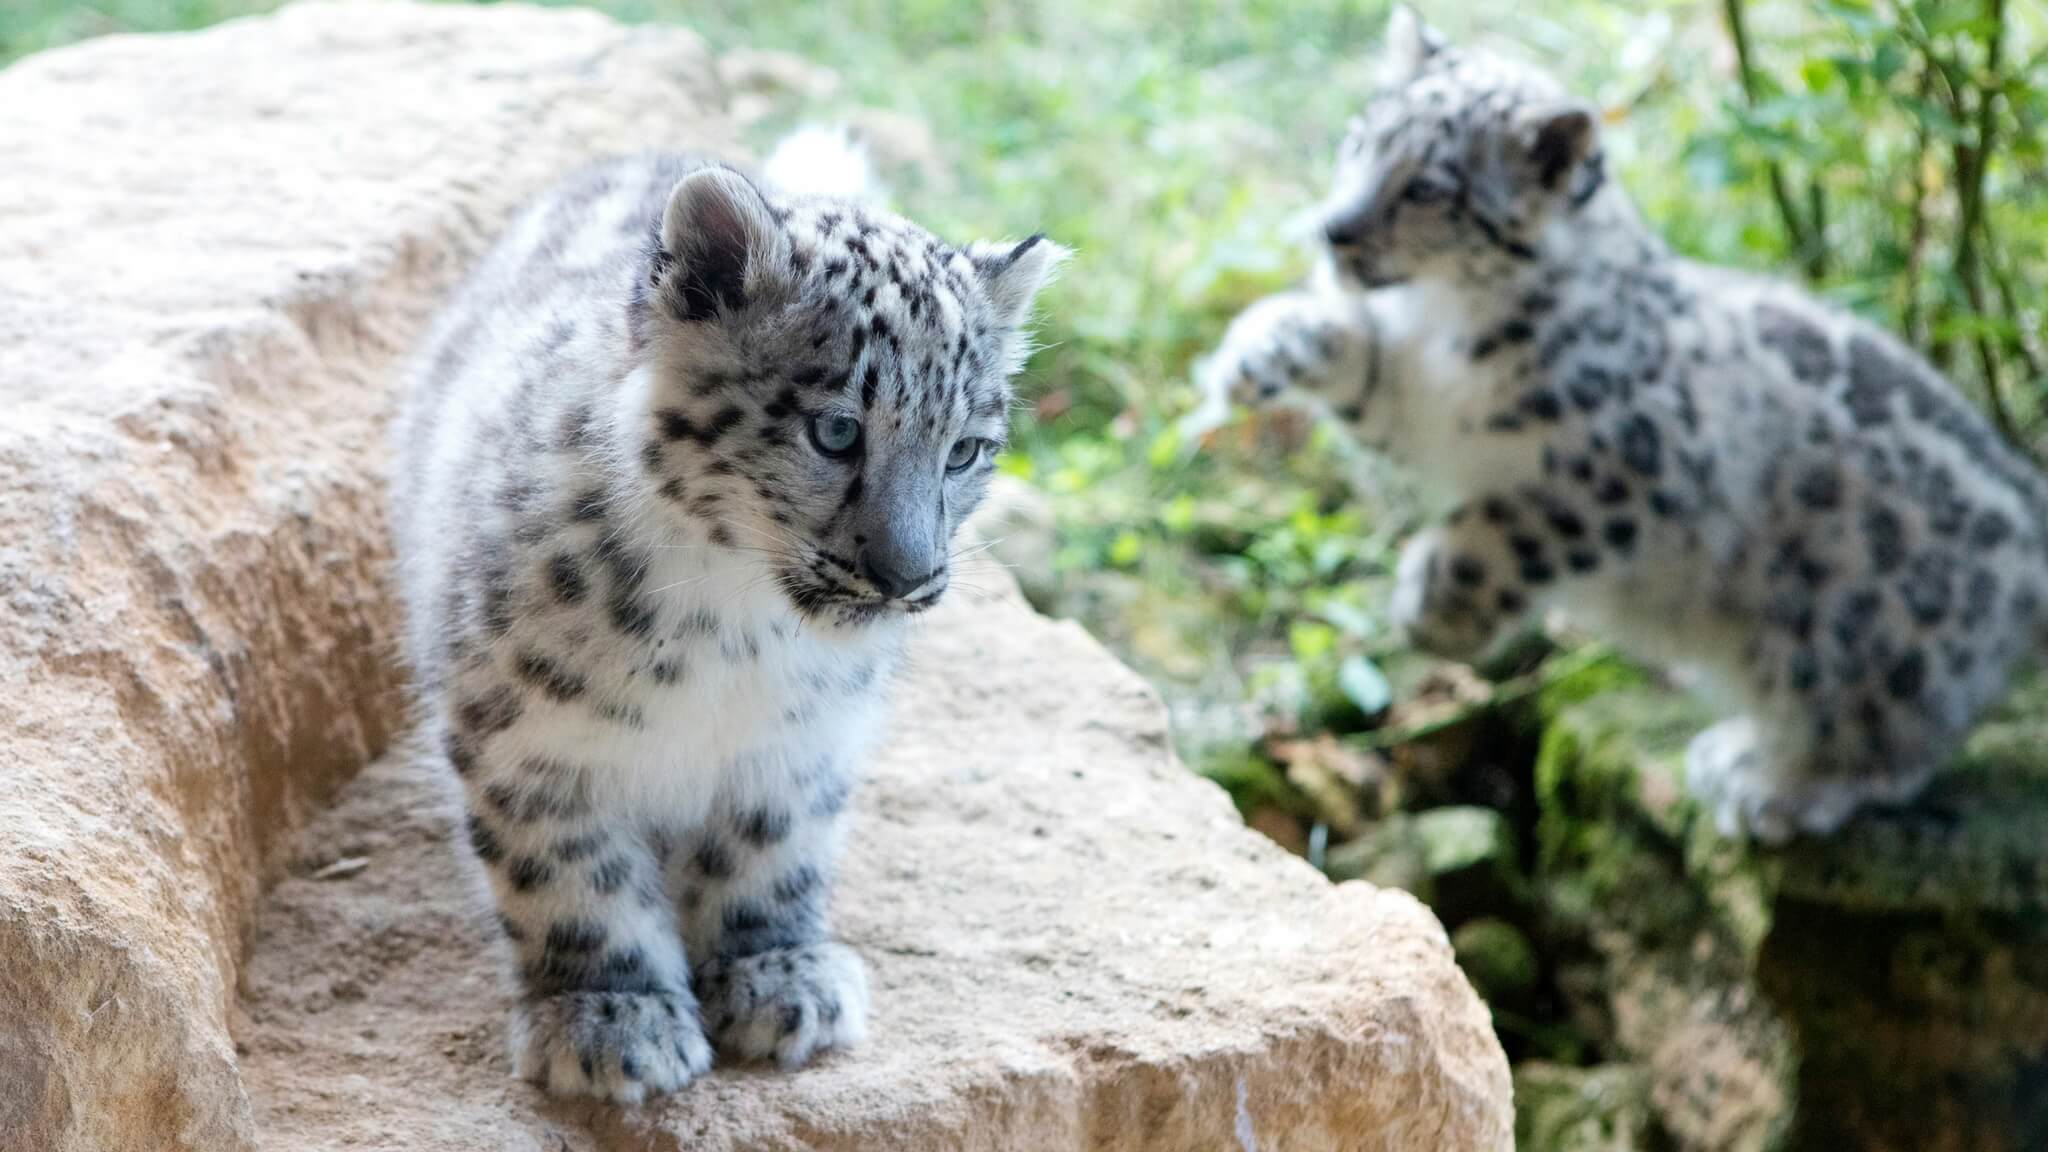 Snow leopard twins born at Twycross Zoo